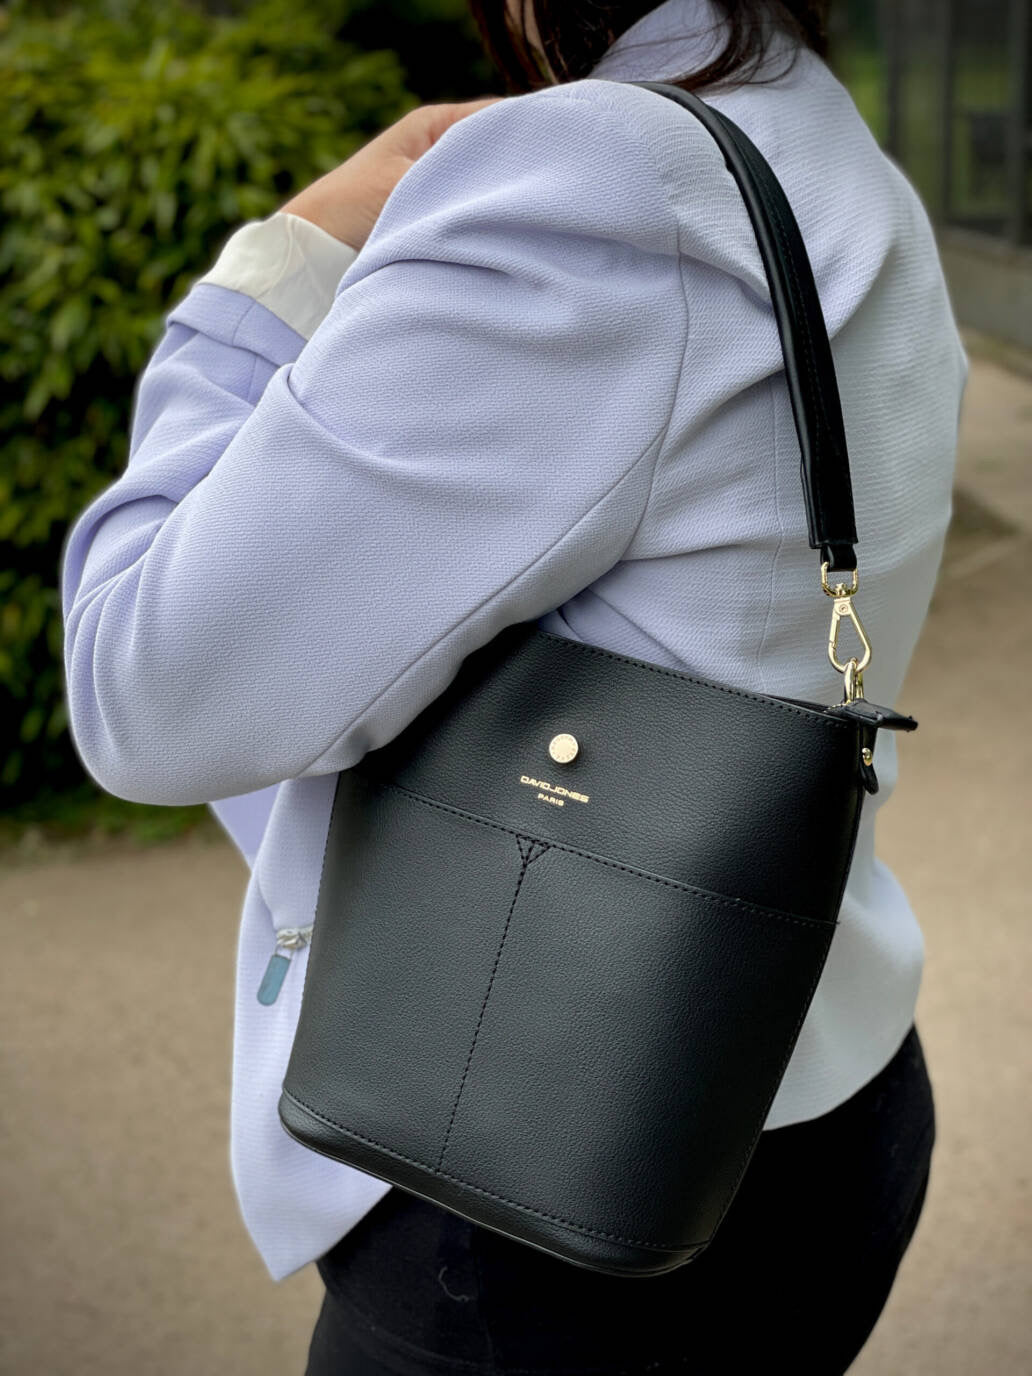 Pu Leather Top-handle Bag, Women's David Jones Bags